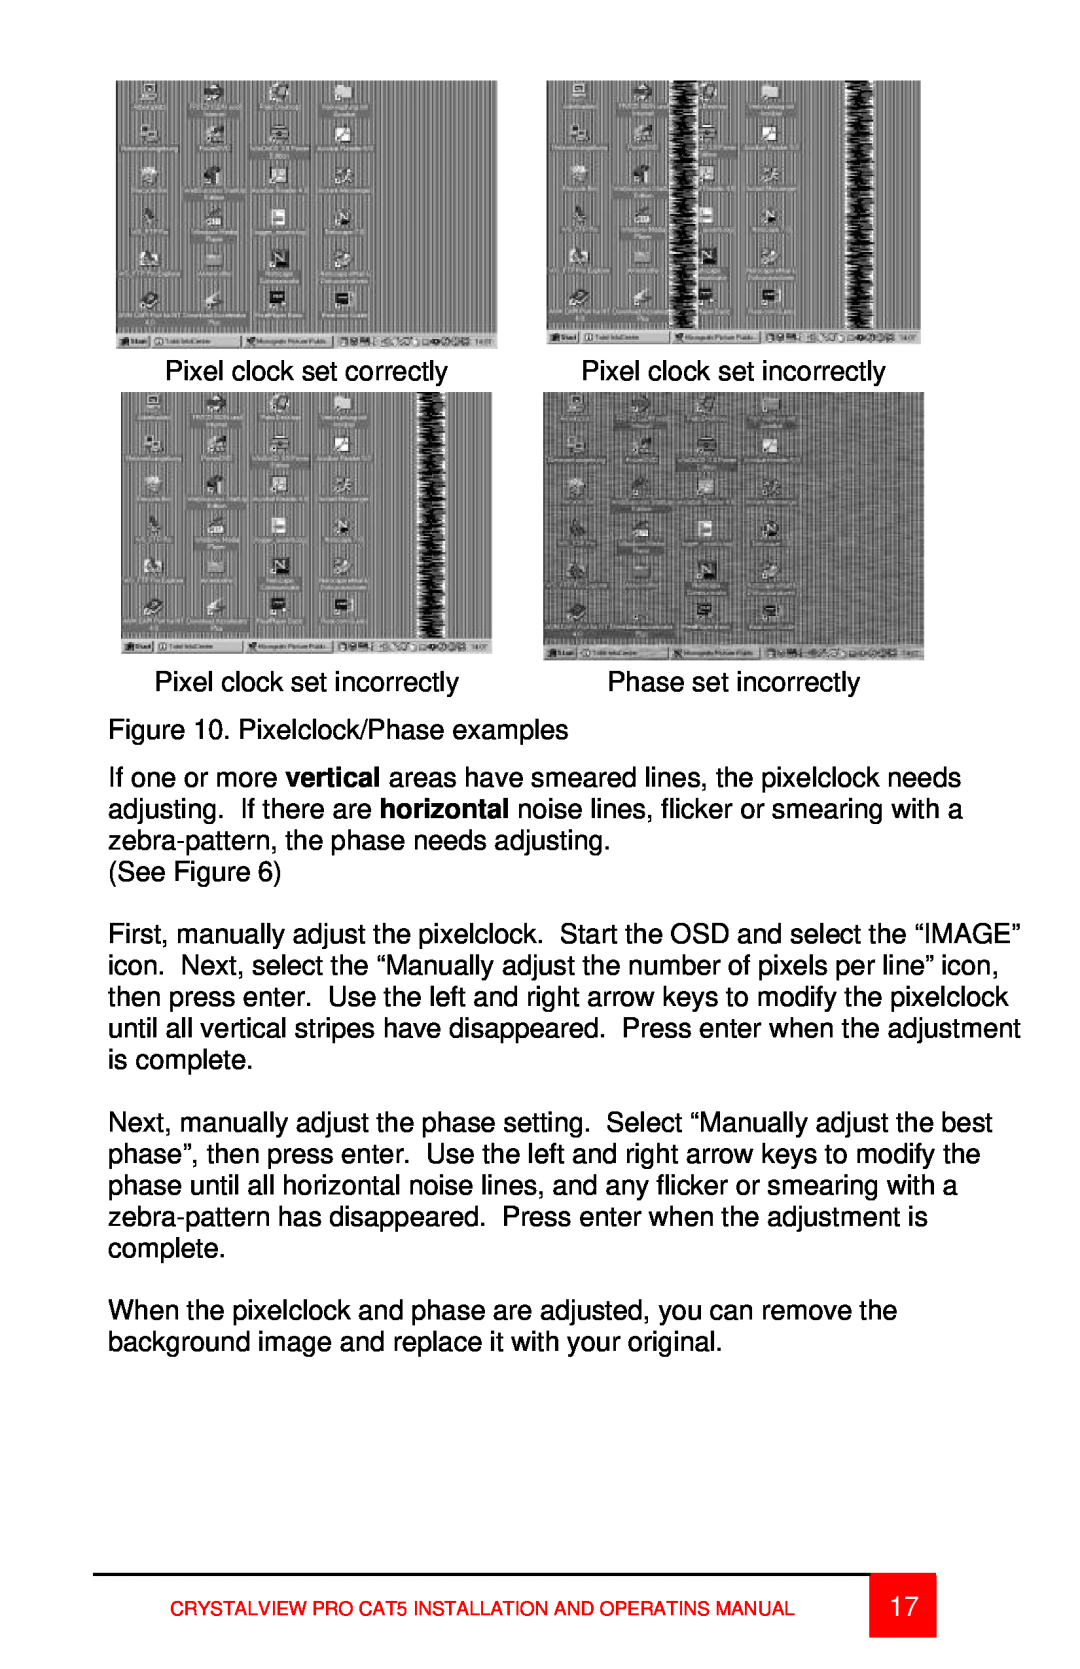 Rose electronic CAT5 manual Pixel clock set correctly 